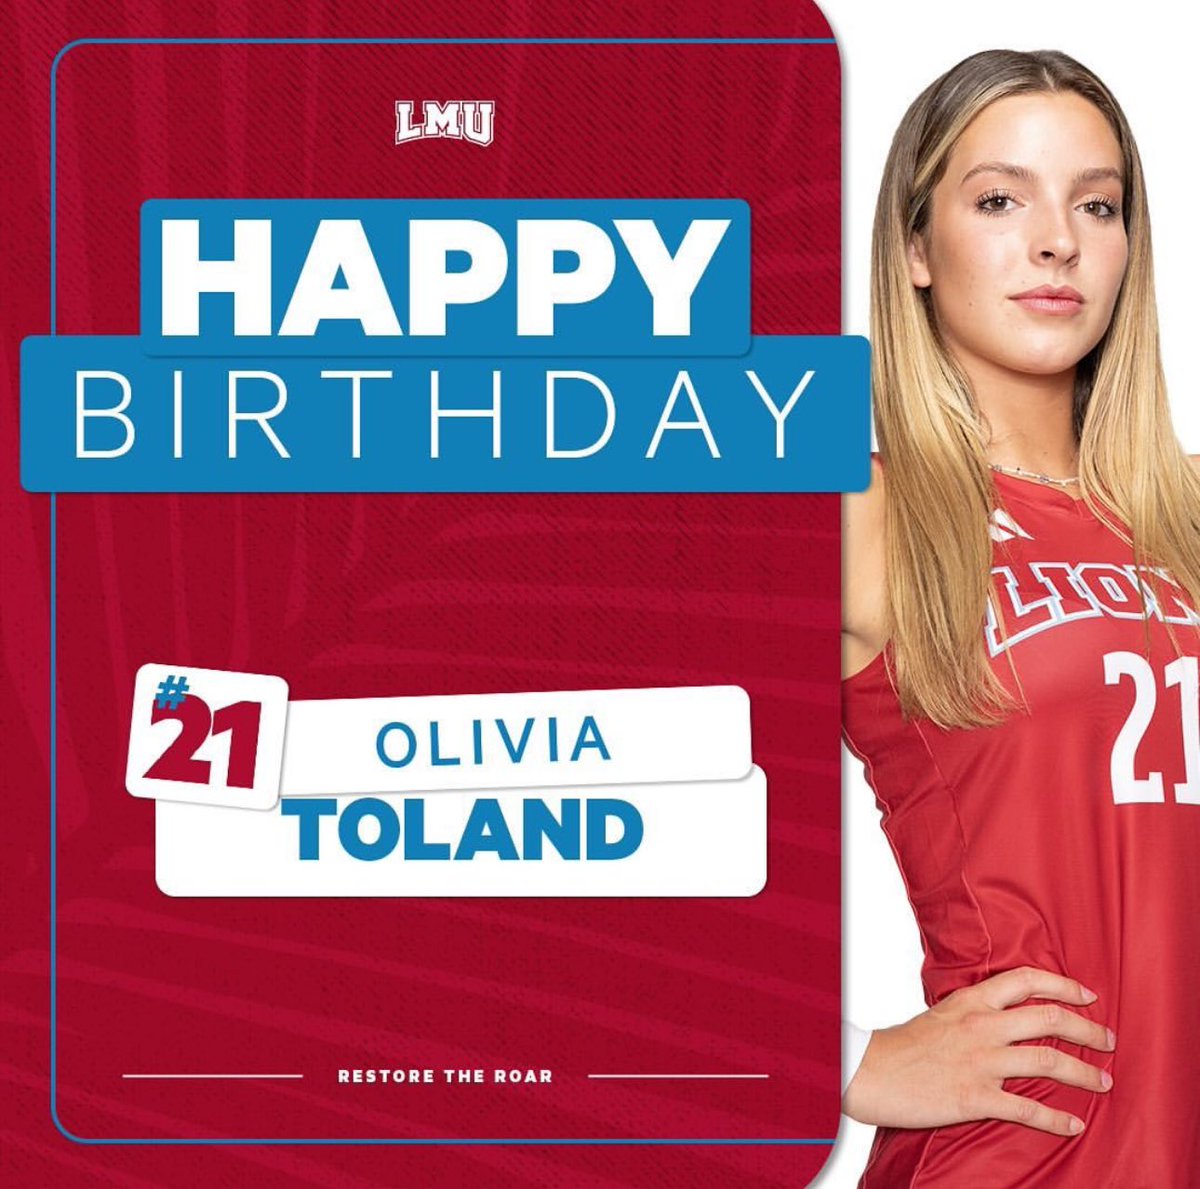 Happy birthday Olivia 🎉🎉 #RestoreTheRoar